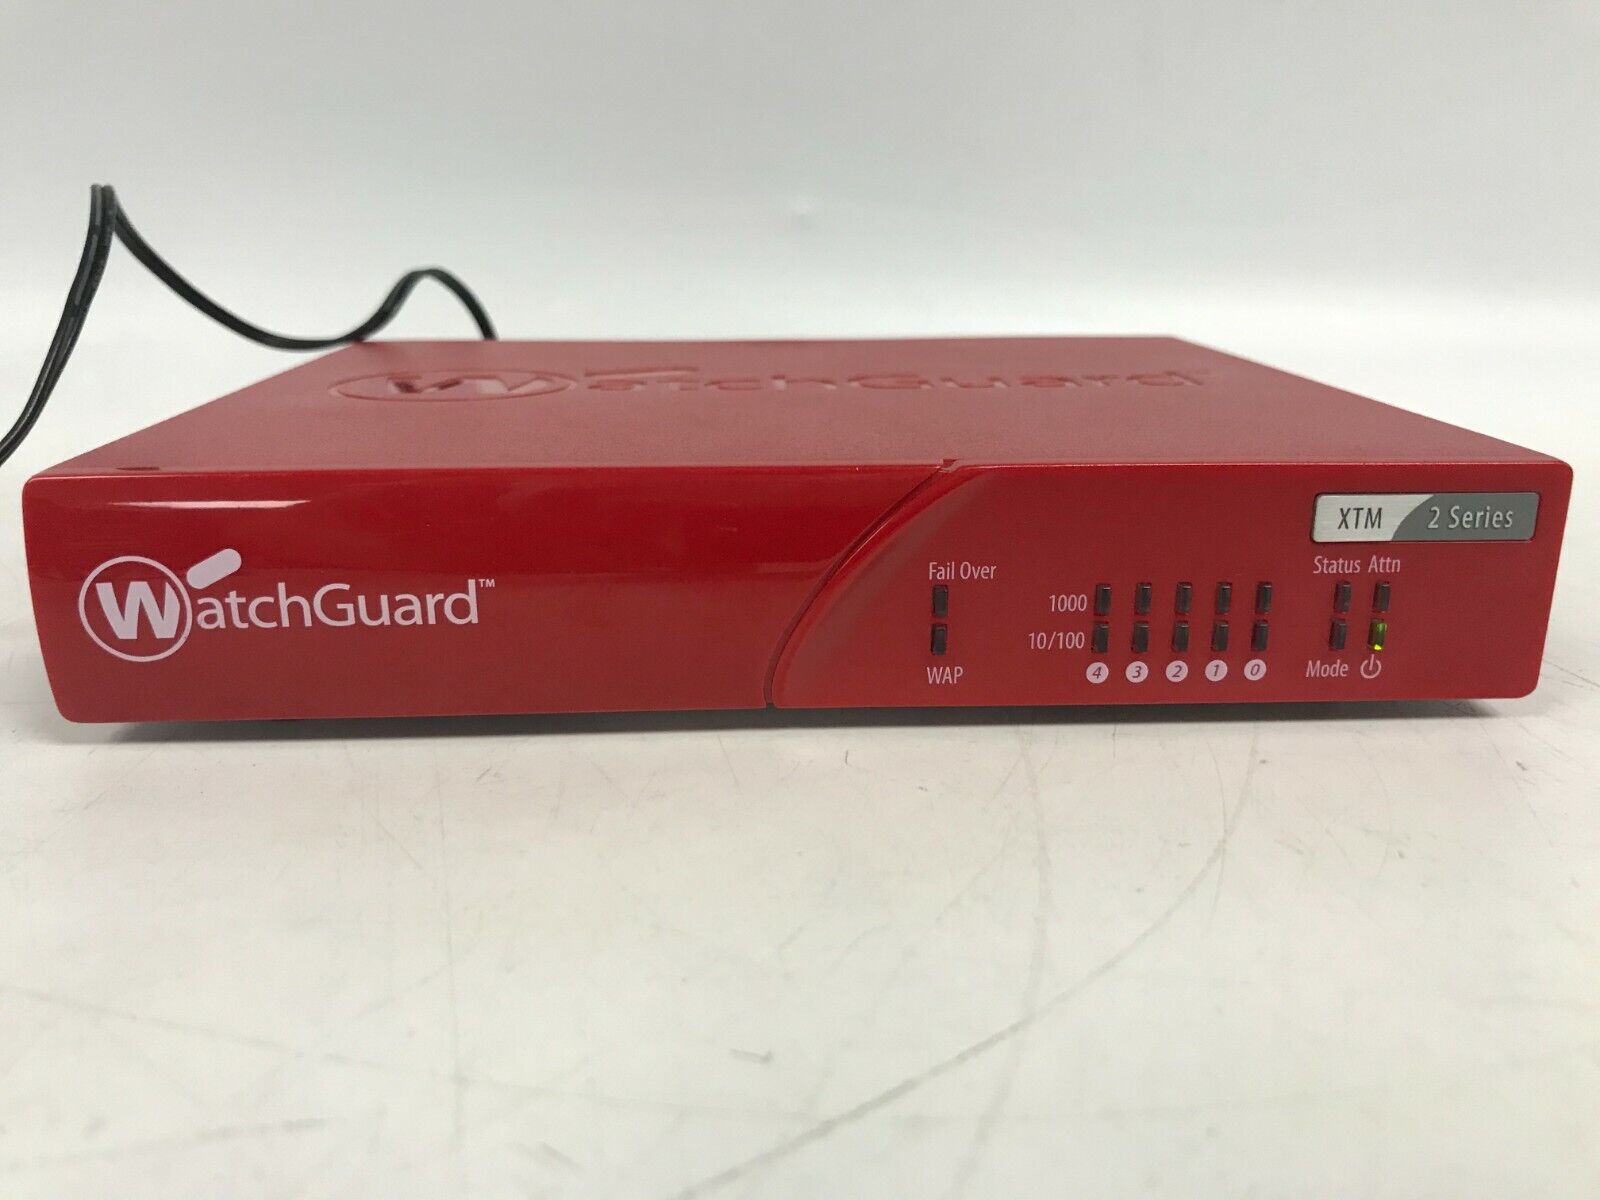 Watchguard XTM 2 SERIES Firewall Model FS1E5W